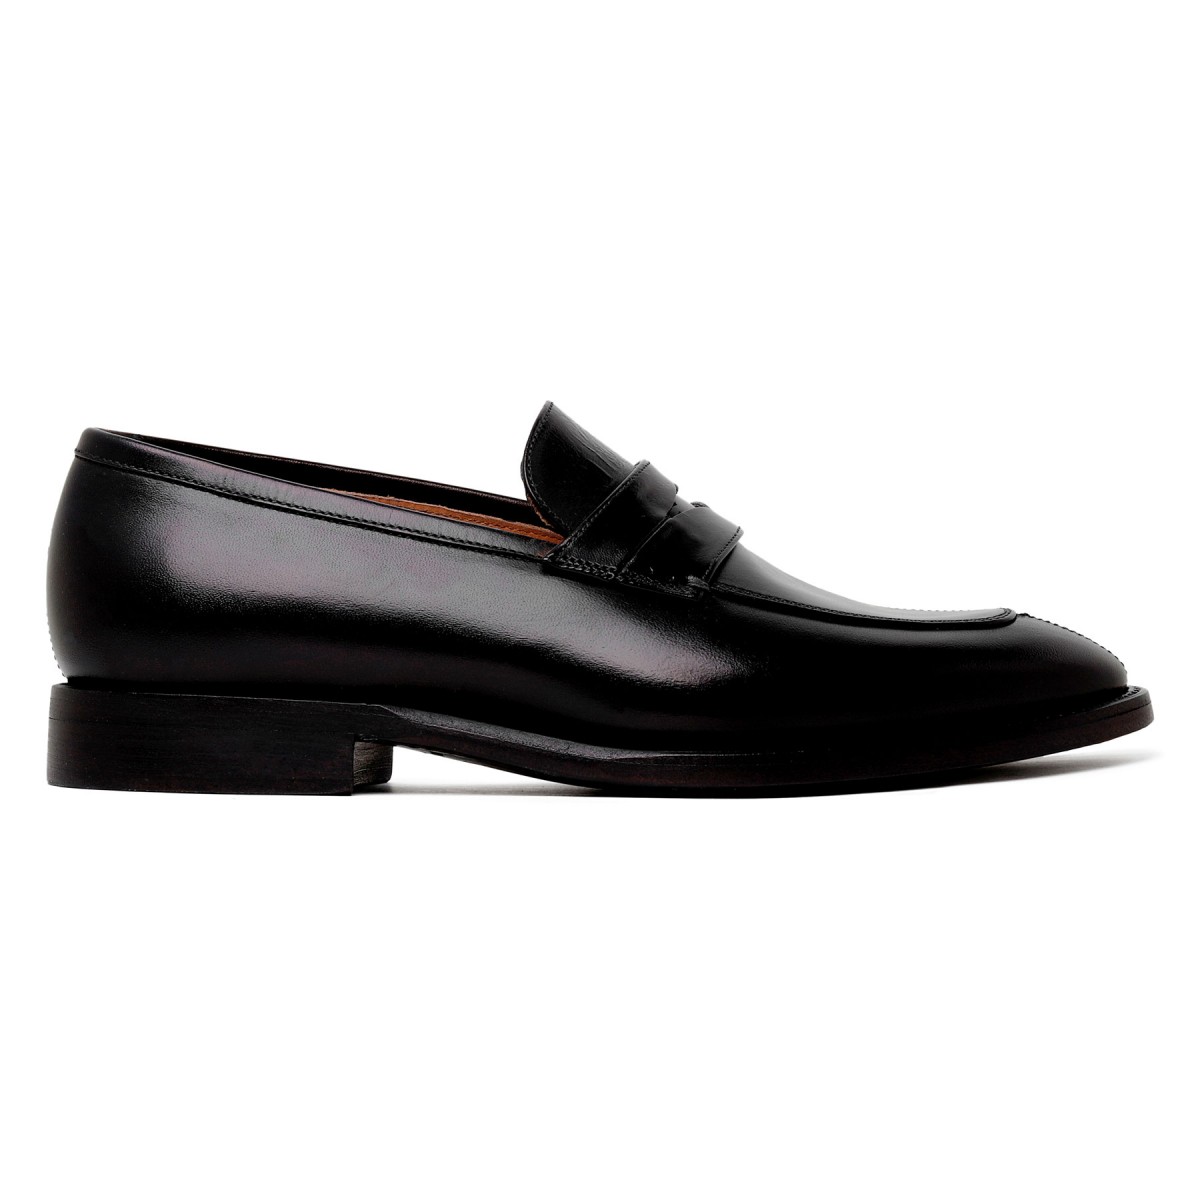 Marsiglia black leather loafers